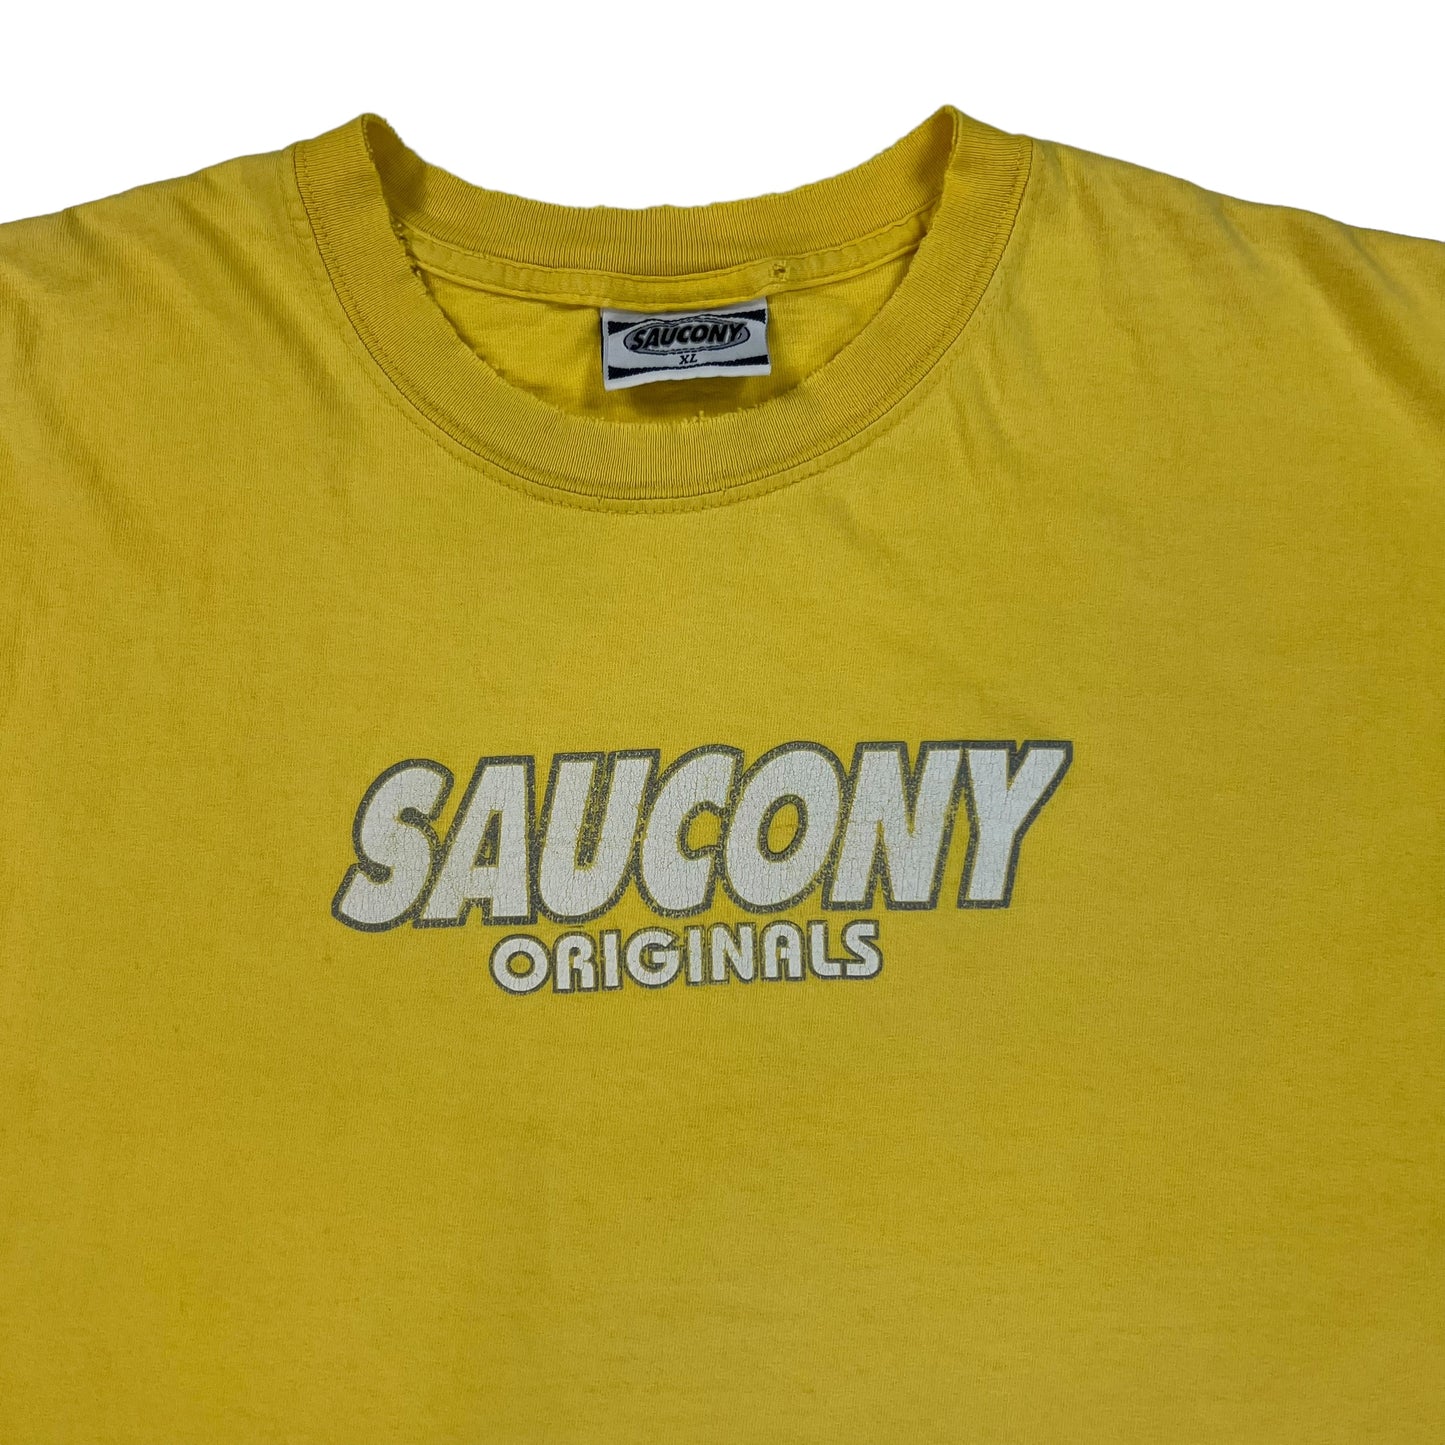 Vintage 90s Saucony Originals faded promo tee (XL)